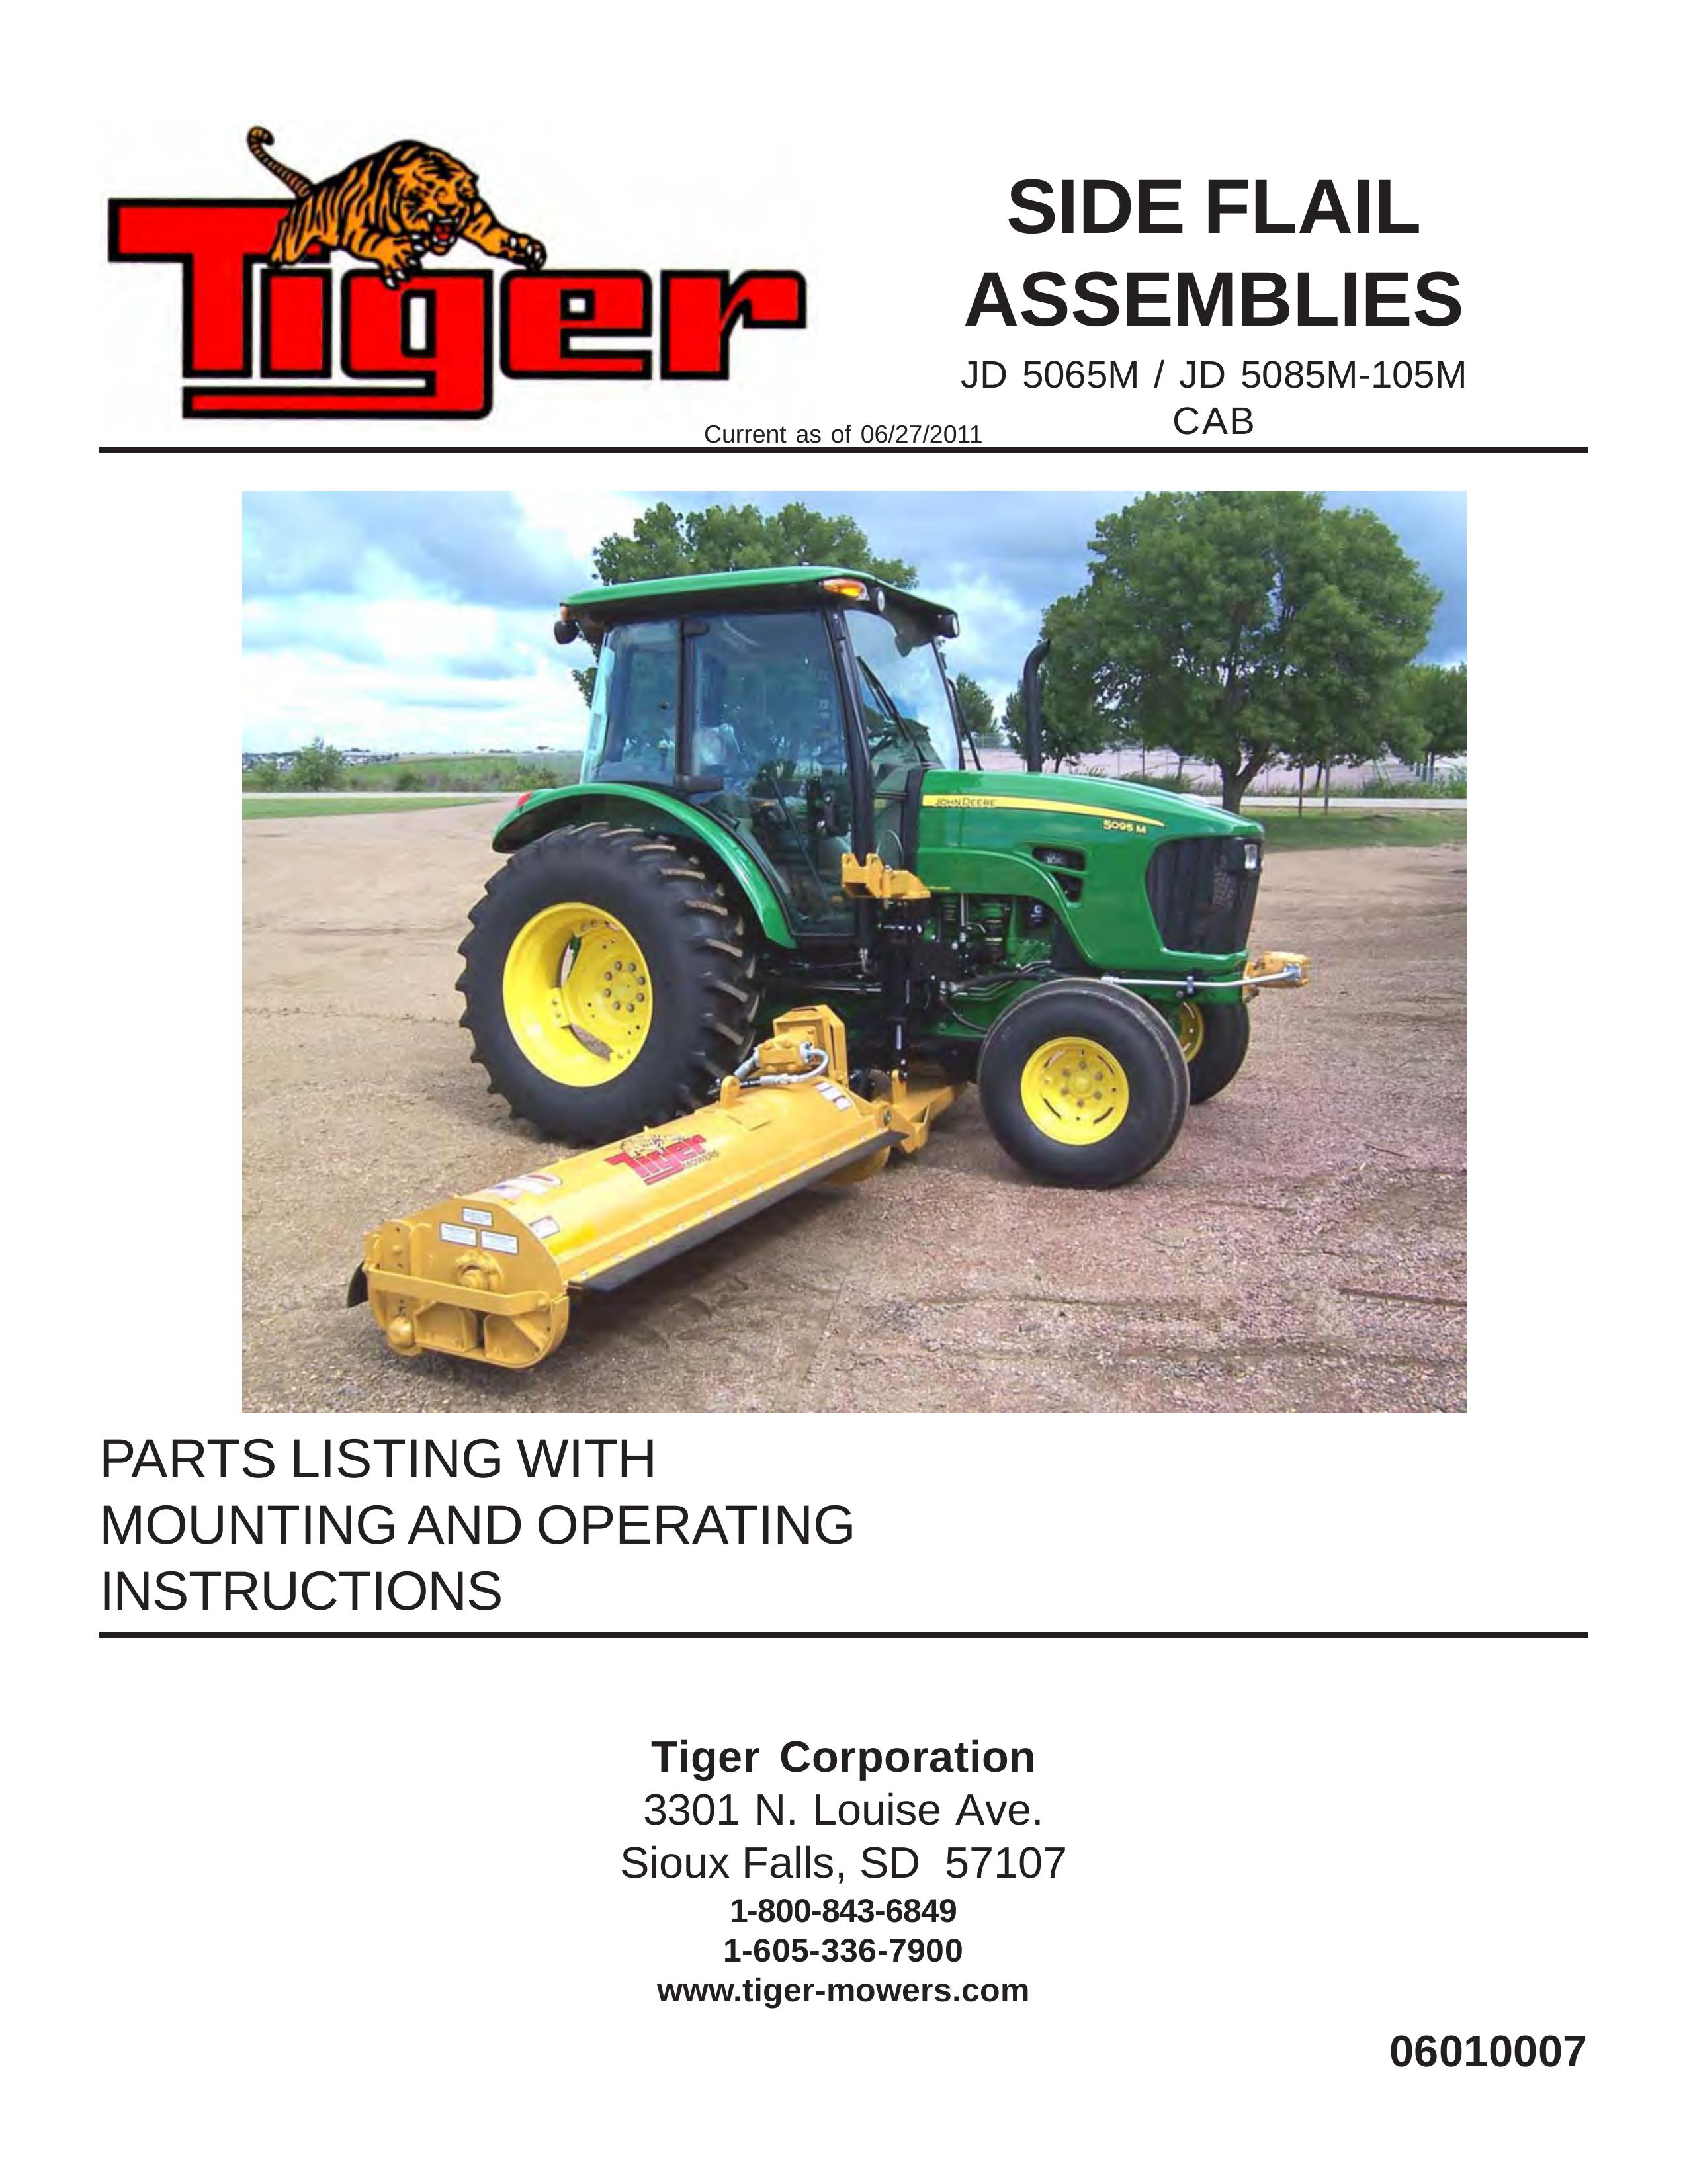 Tiger Mowers JD 5065M Lawn Mower User Manual